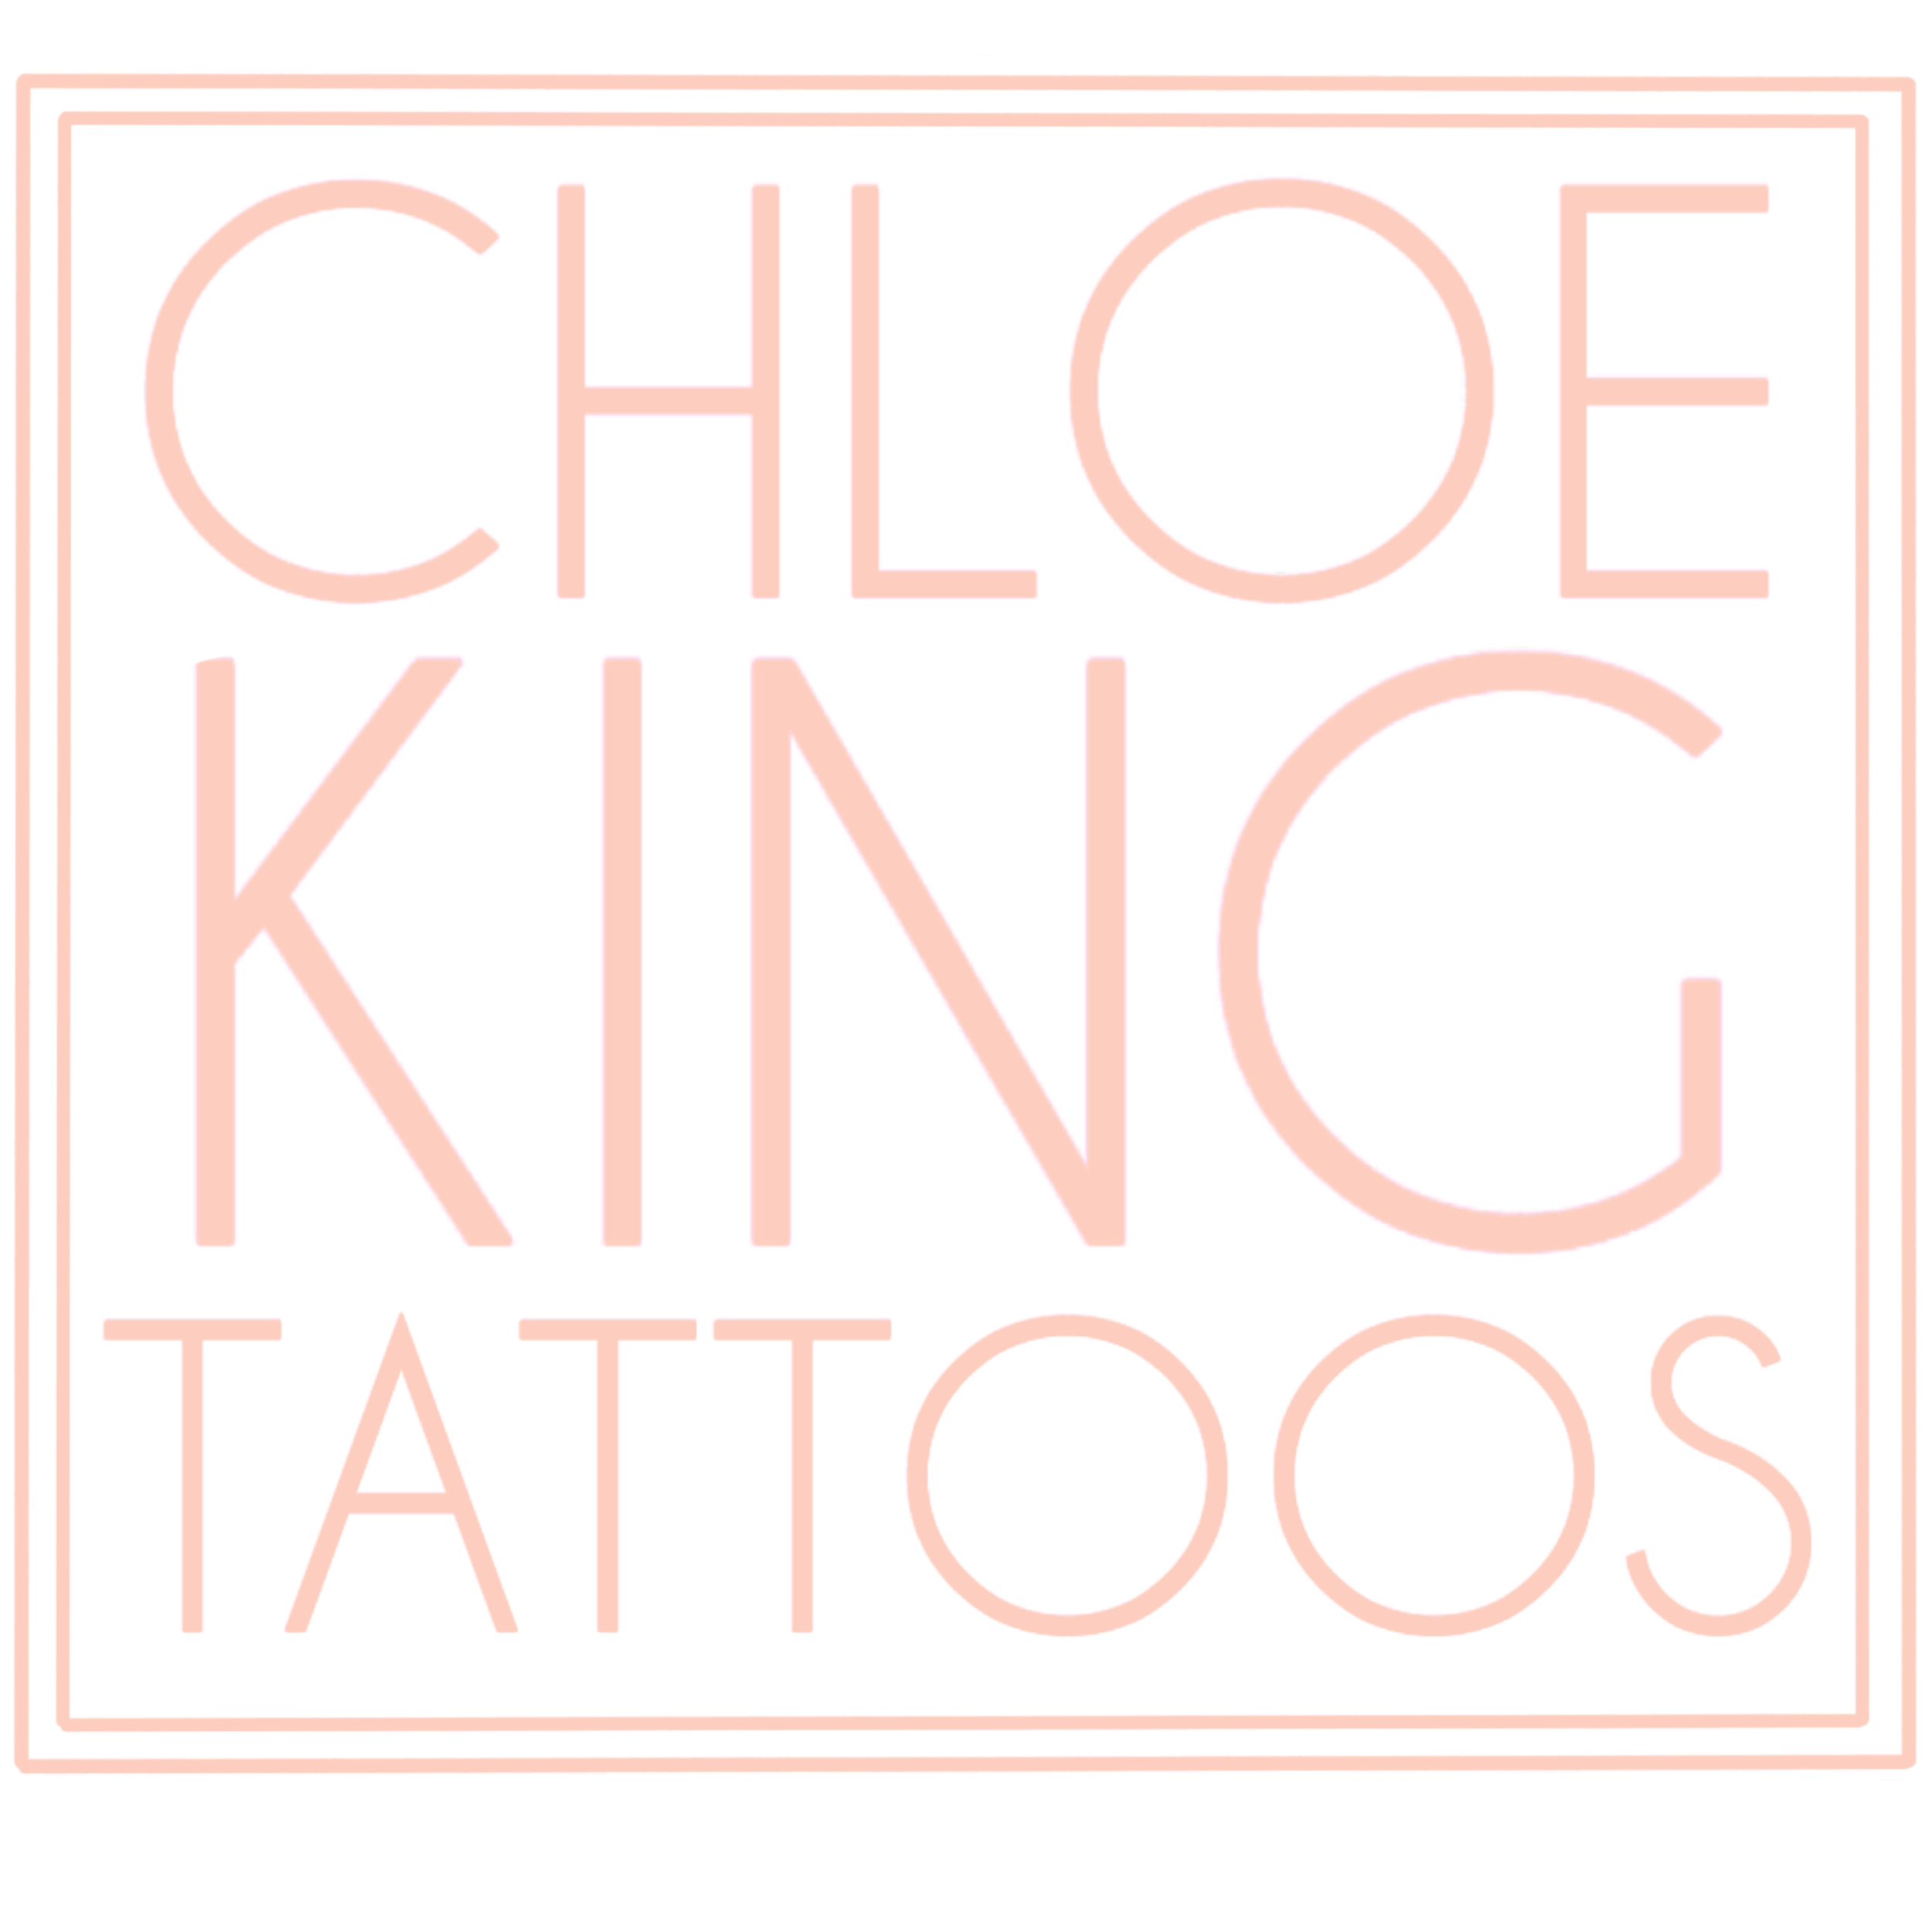 Chloe King Tattoos